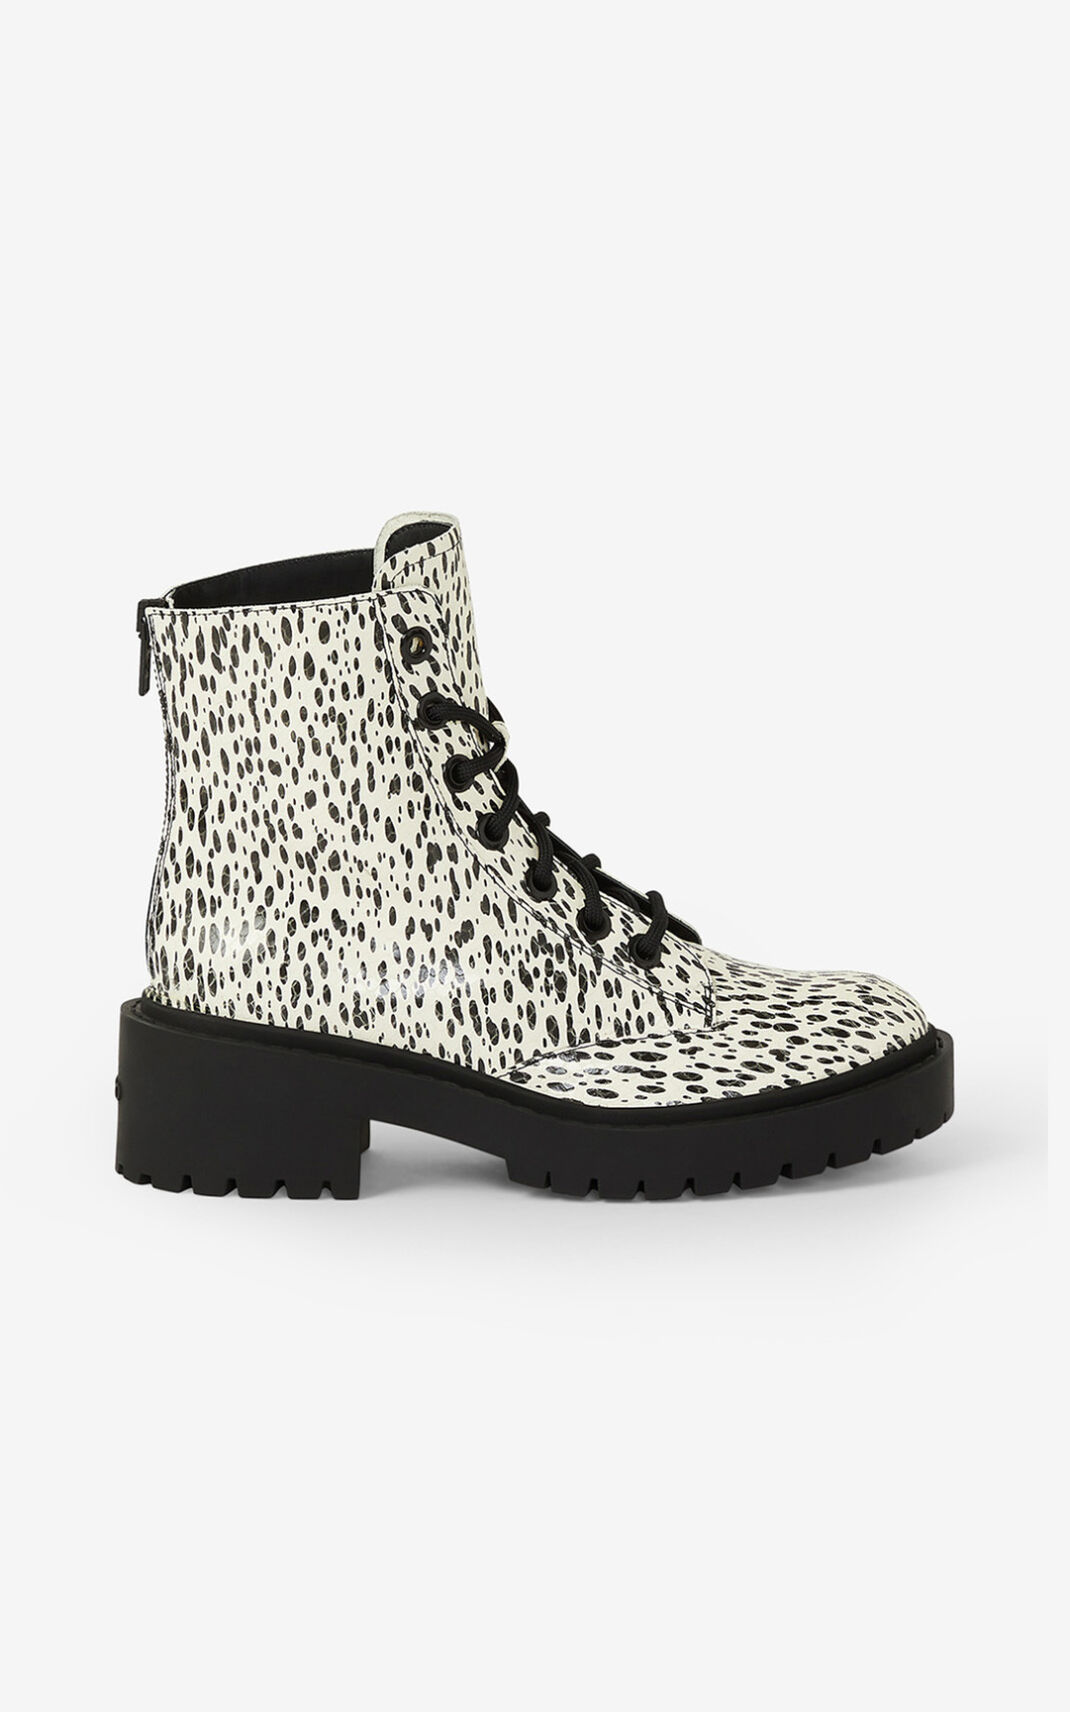 Botas Kenzo Lace up Pike Leopard Cuero ankle Mujer Blancas - SKU.3530061